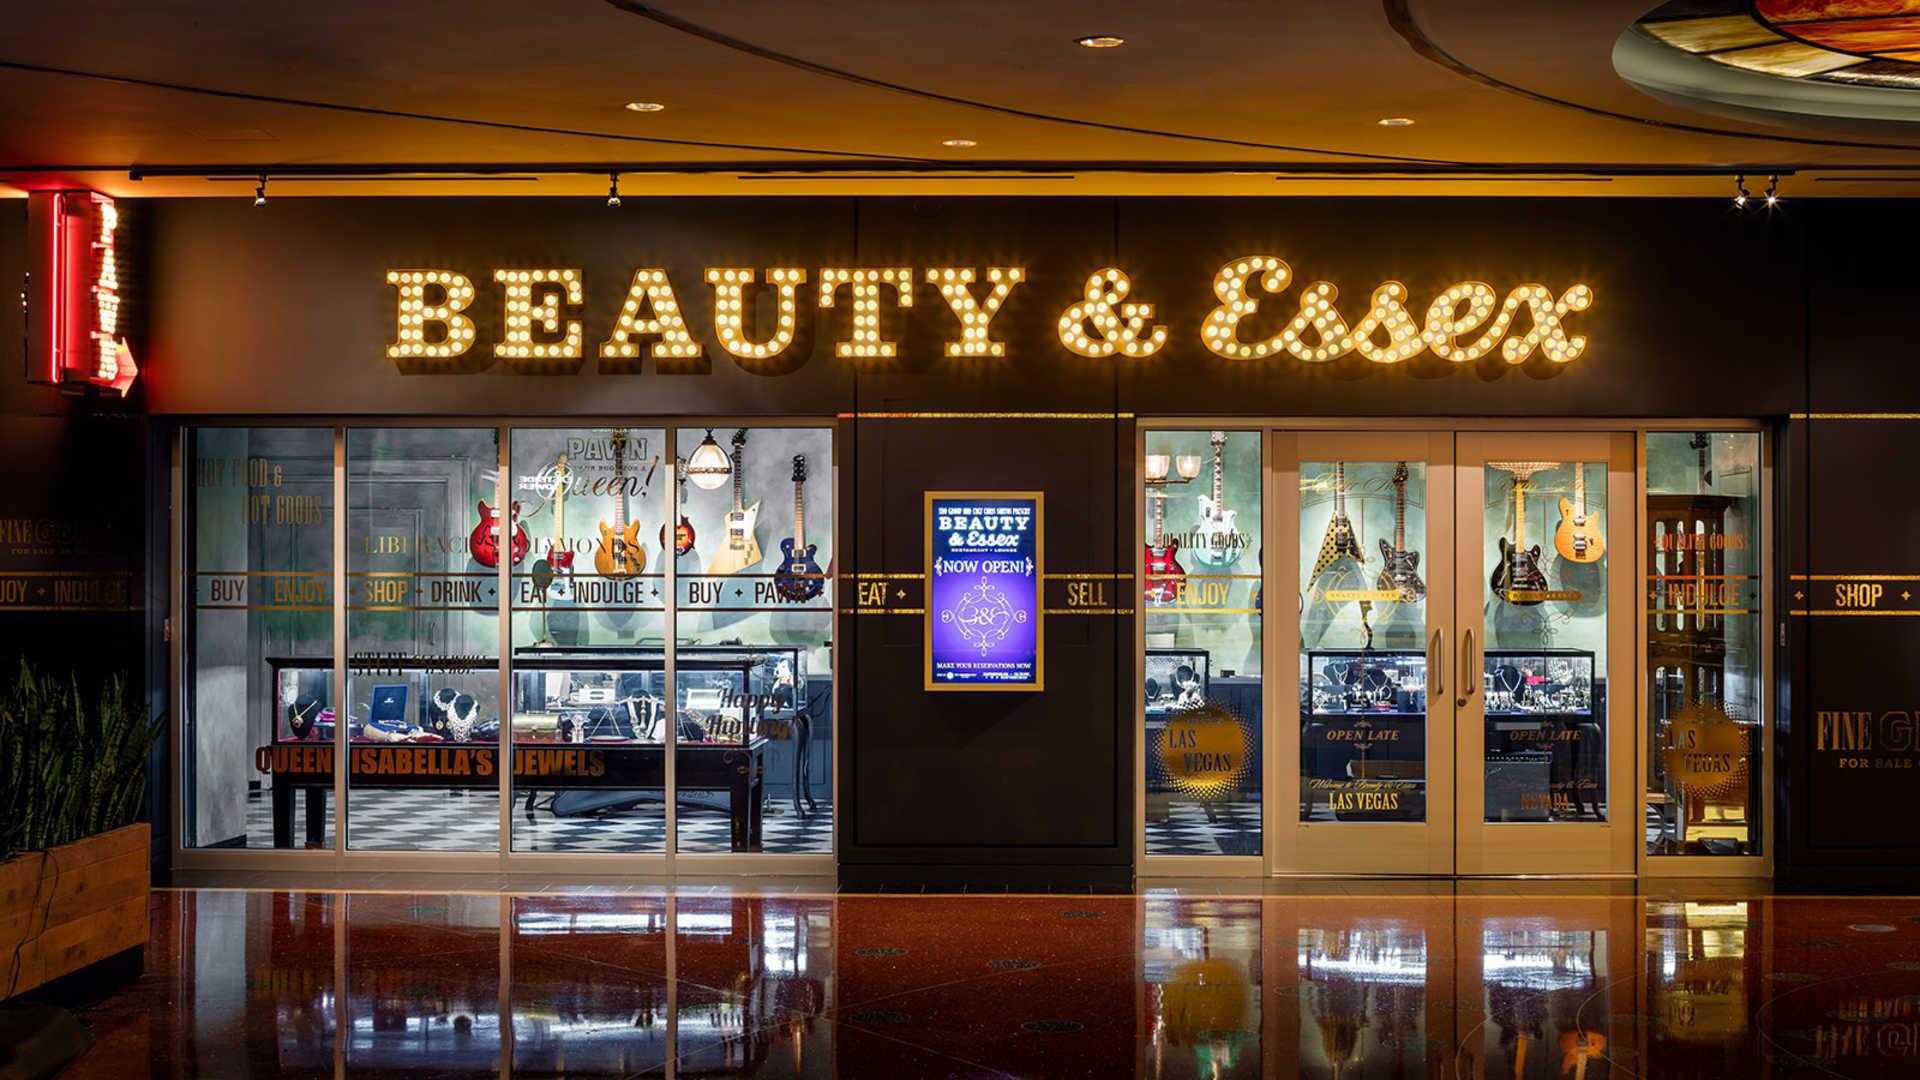 Beauty & Essex Restaurant (Vegas) - Dinner Reservation Request